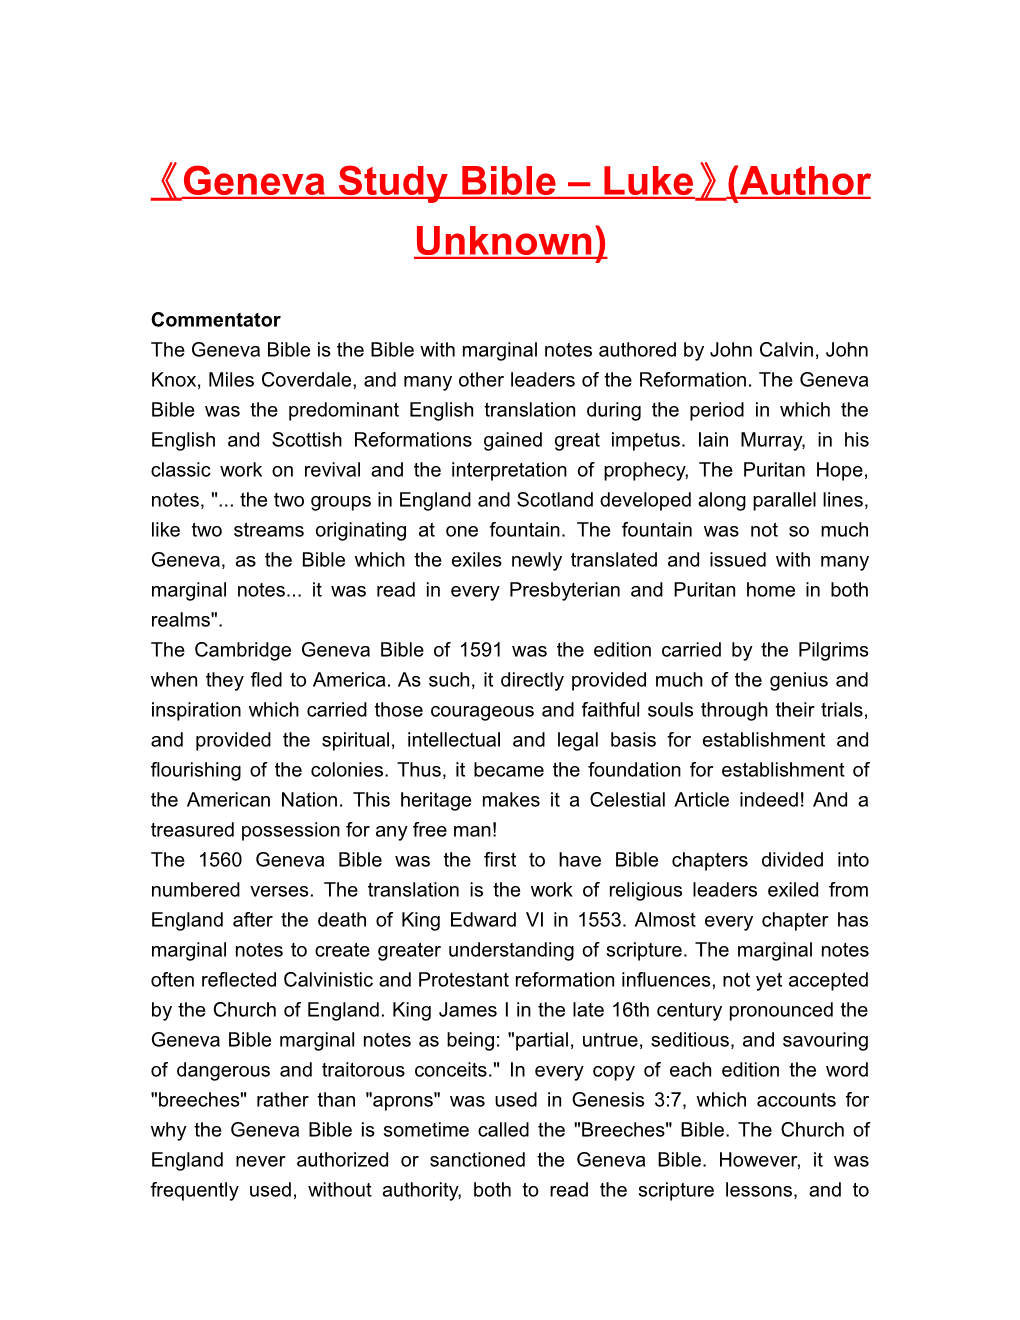 Geneva Study Bible Luke (Author Unknown)